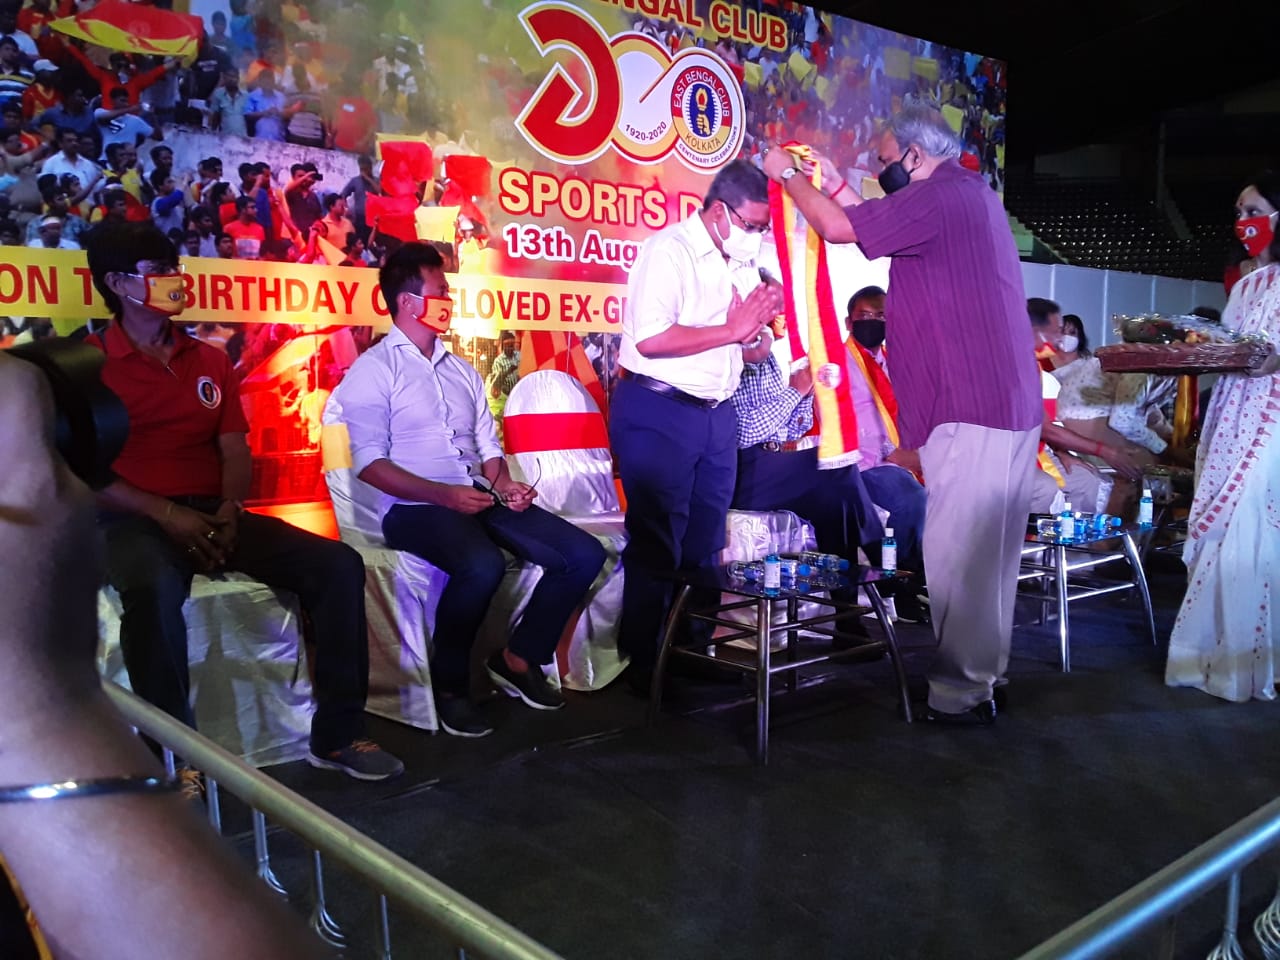 East Bengal Club: Sports Day Celebration 2020